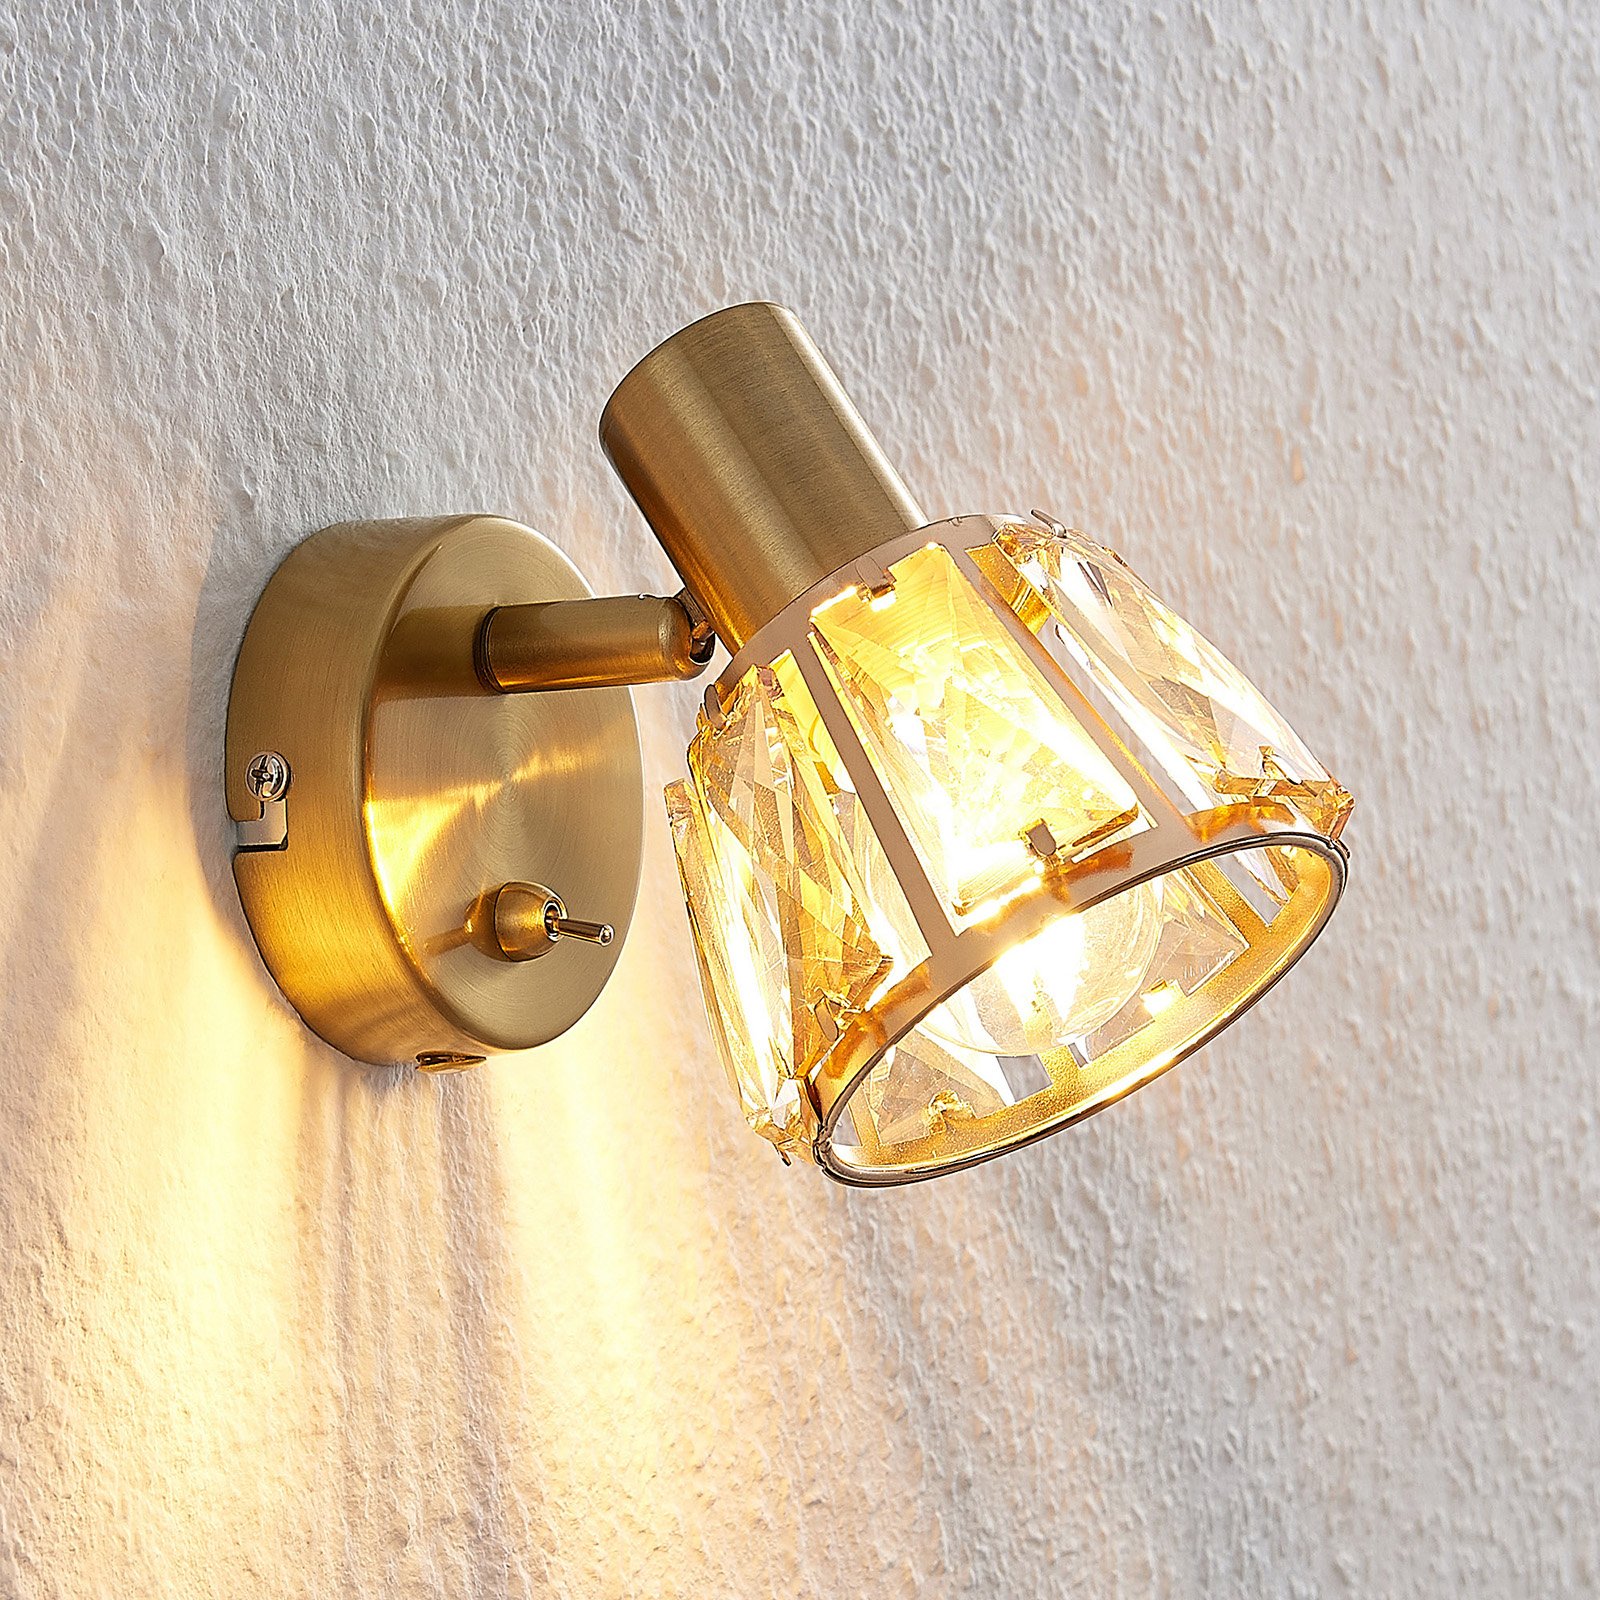 Lindby Kosta wall light with switch, brass